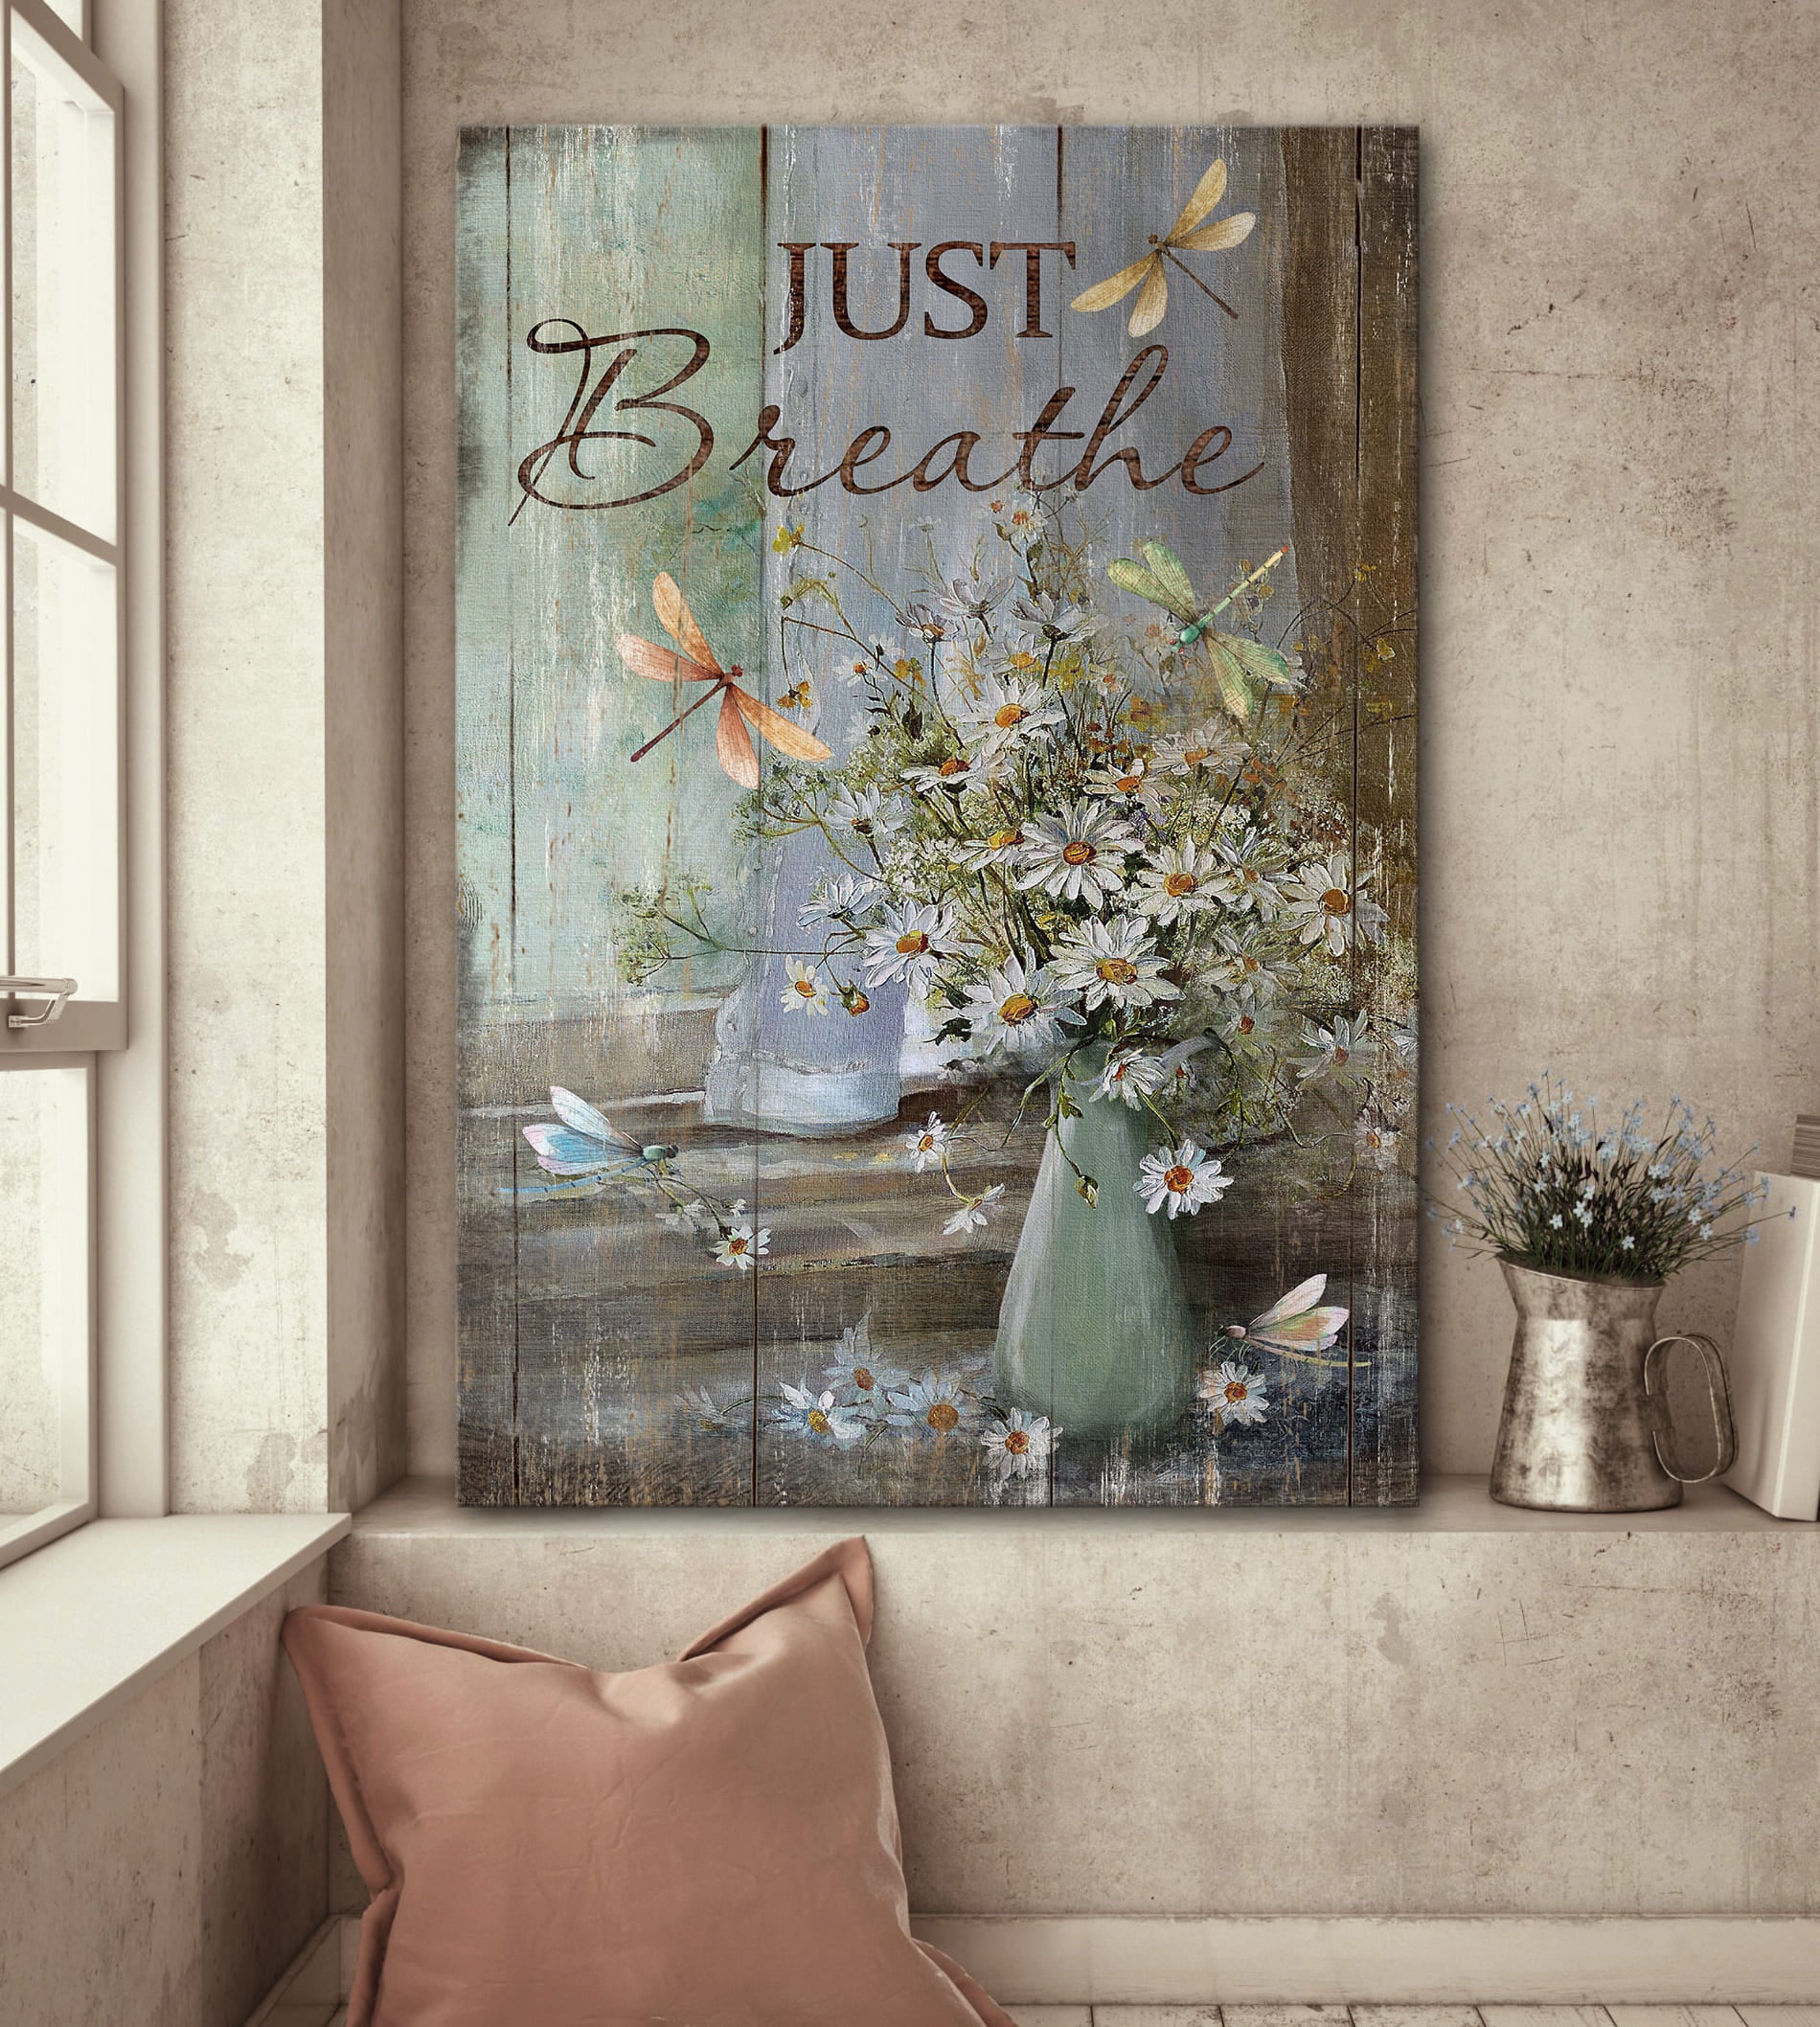 Vintage Flower Vase, Just breathe - Daisy flower, Dragonfly, Jesus Portrait Canvas Prints, Wall Art